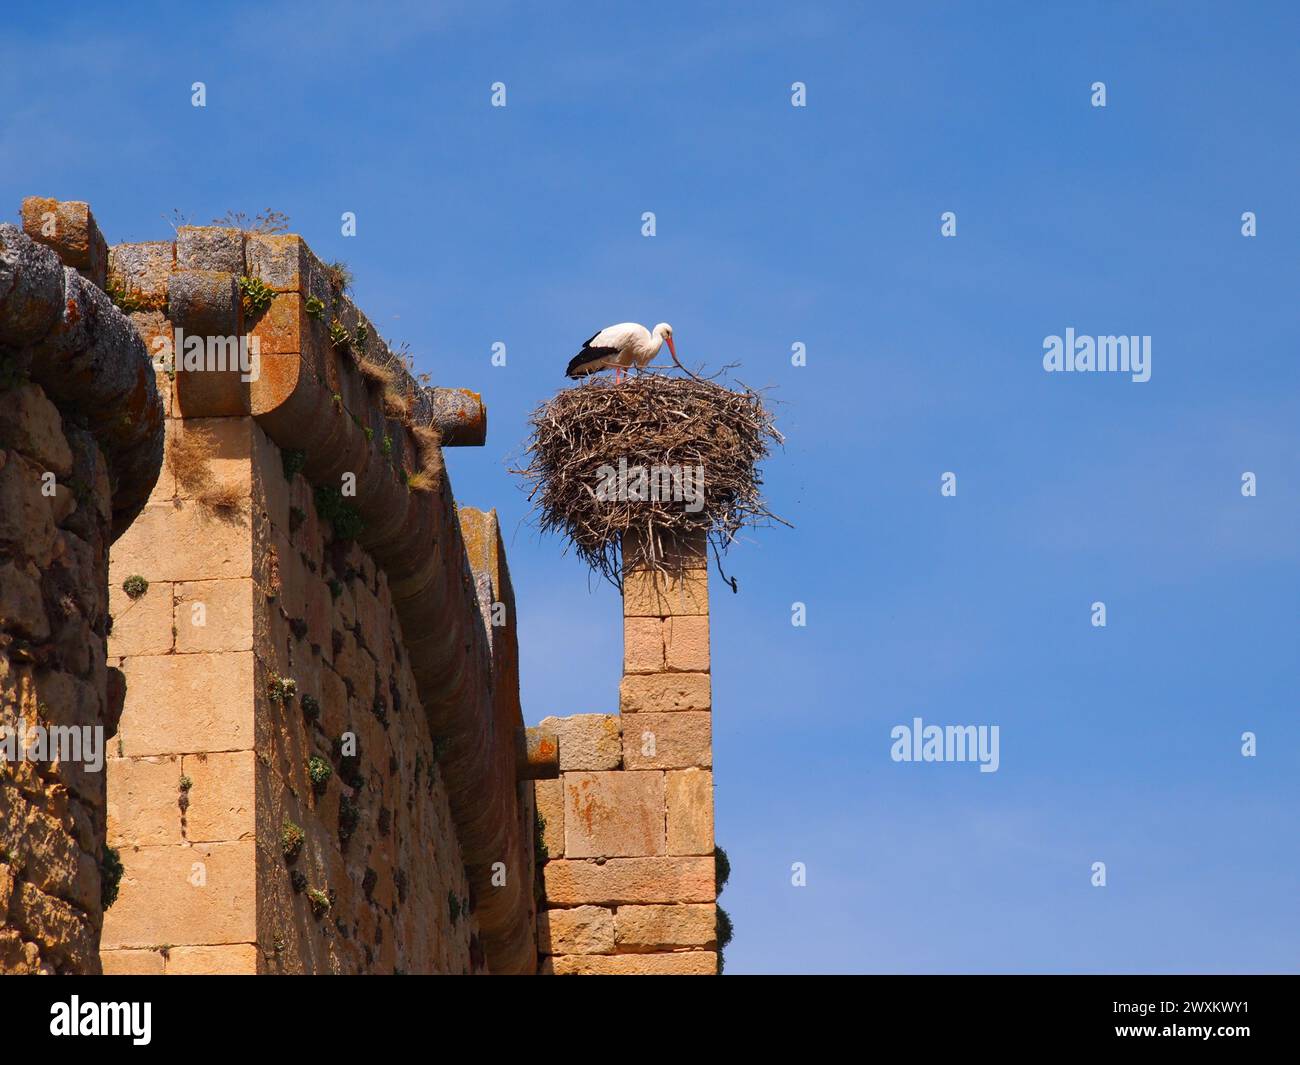 Stork nest on brick building near steep wall Stock Photo